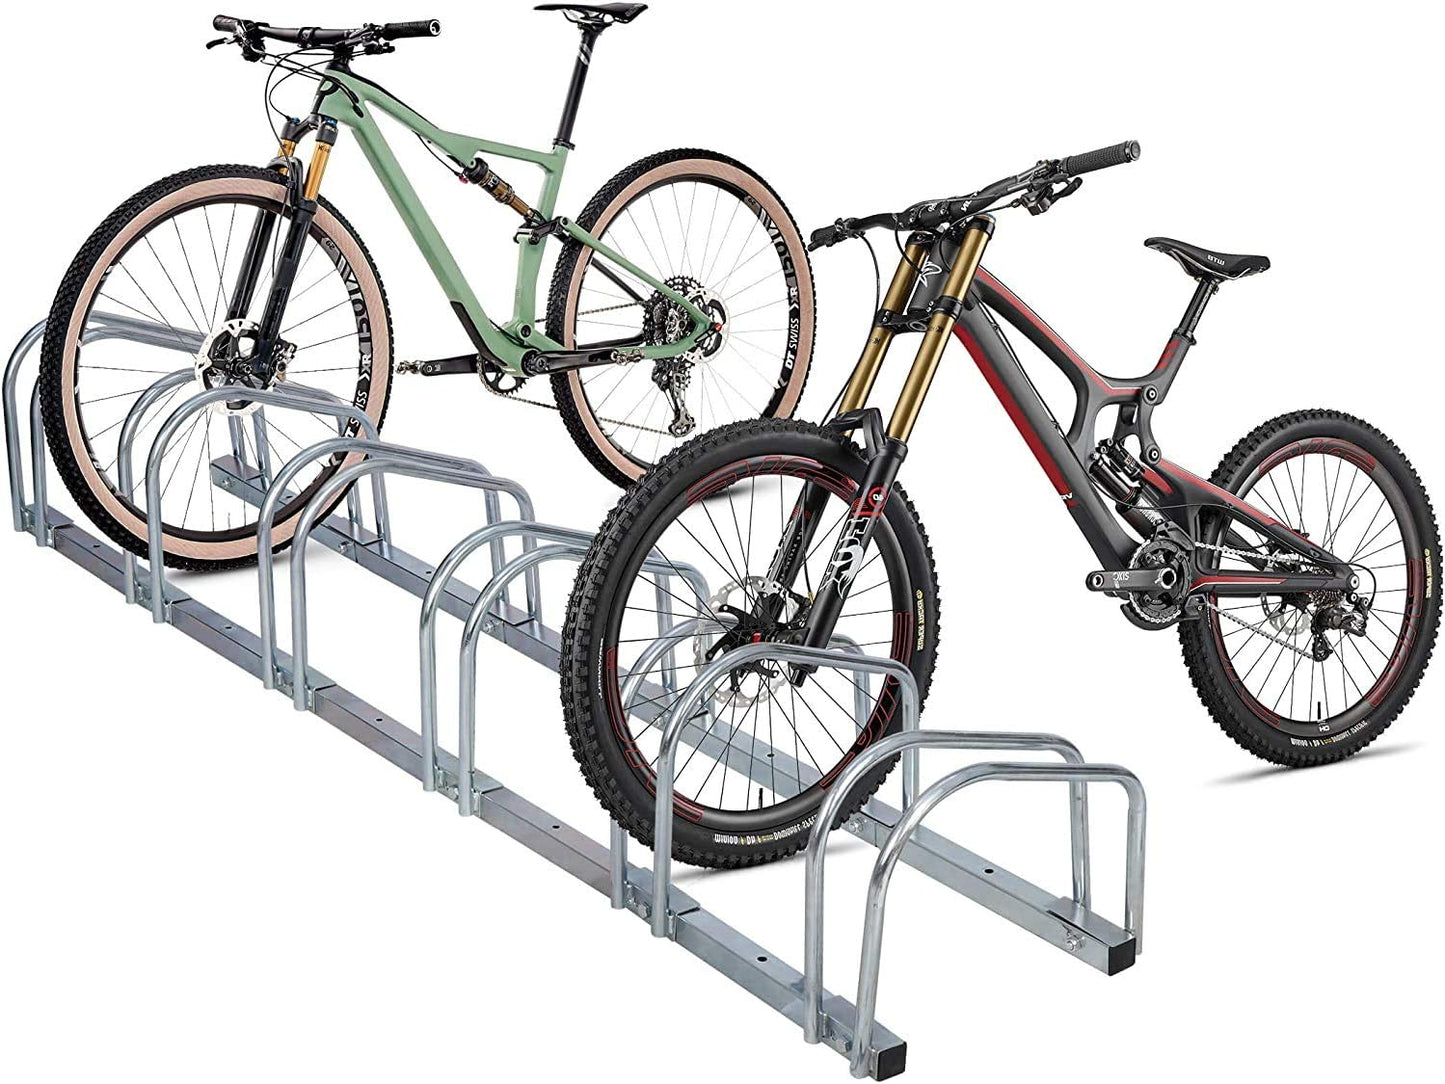 1-6 Bike Rack Bicycle Floor Parking Stand for Mountain Bike Road Bike Indoor Outdoor Garage Adjustable Bicycle Storage Organizer Stand